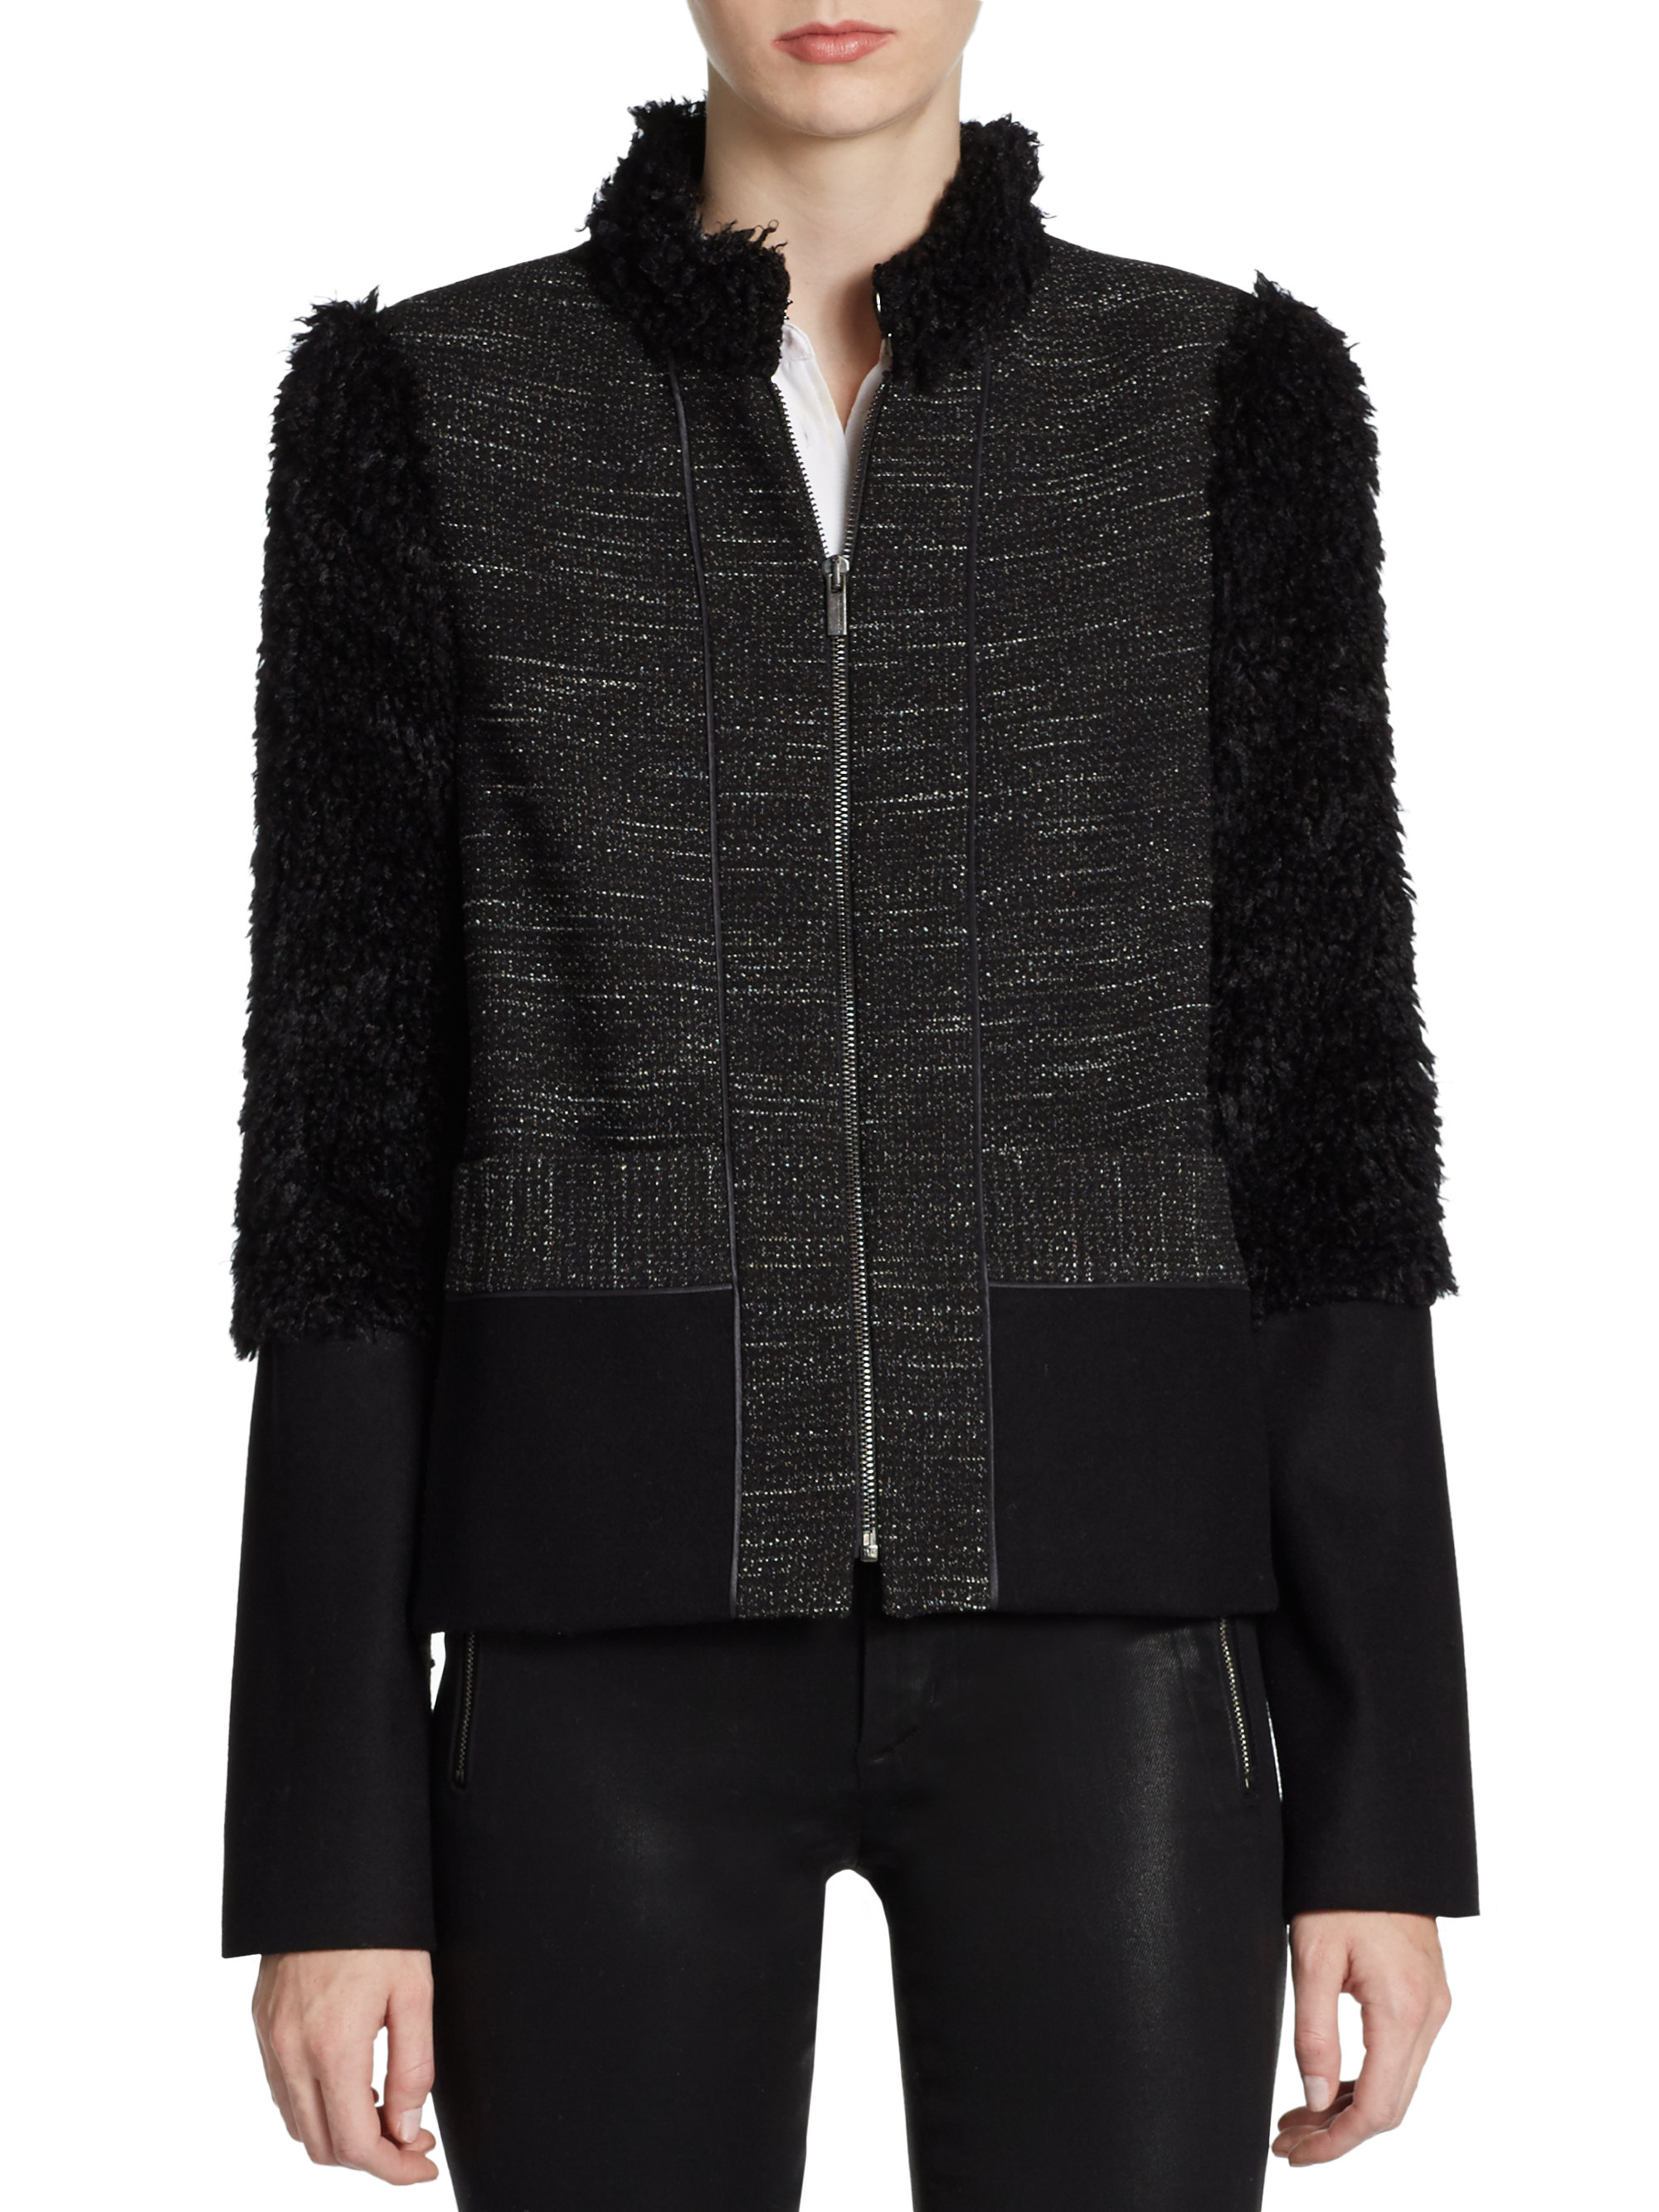 Lyst - Bcbgmaxazria Tweed Faux Fur Jacket in Black